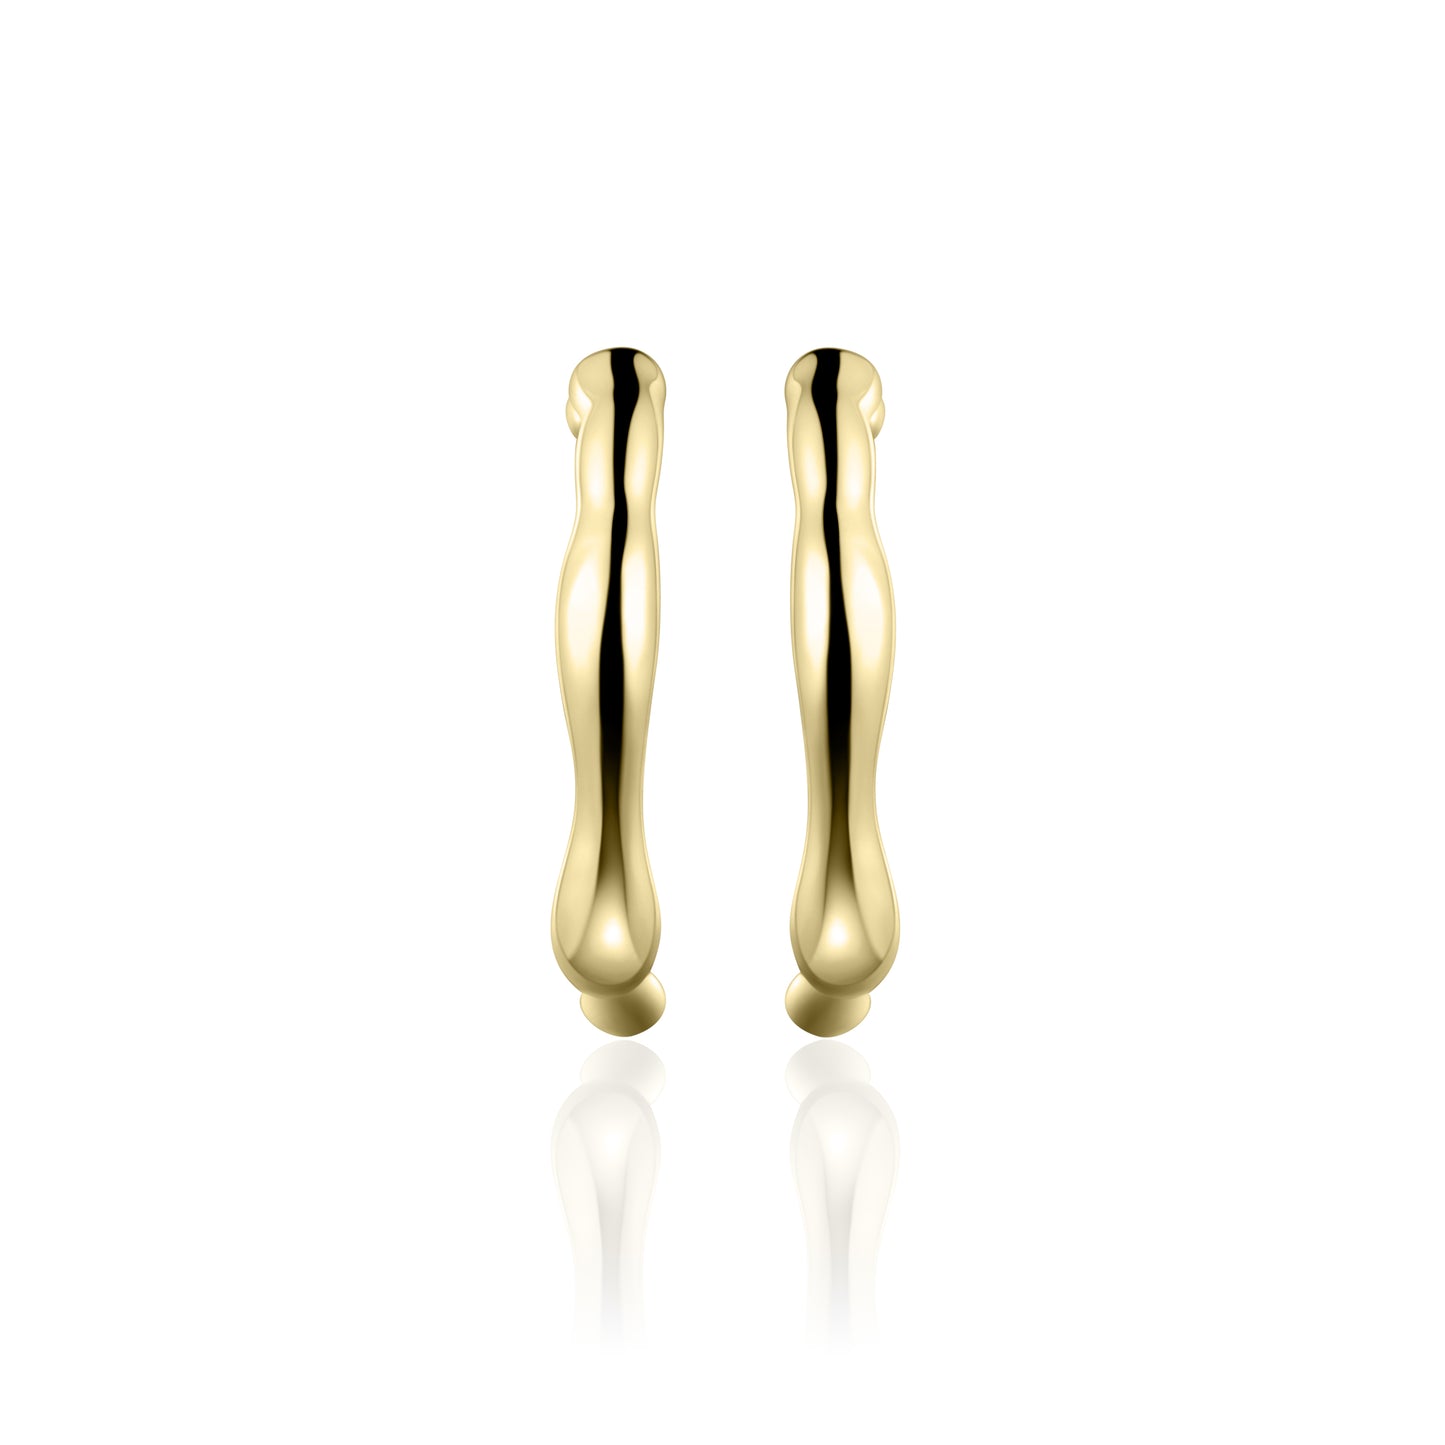 ORGANIC 24mm Hoop Earrings - Gold - John Ross Jewellers